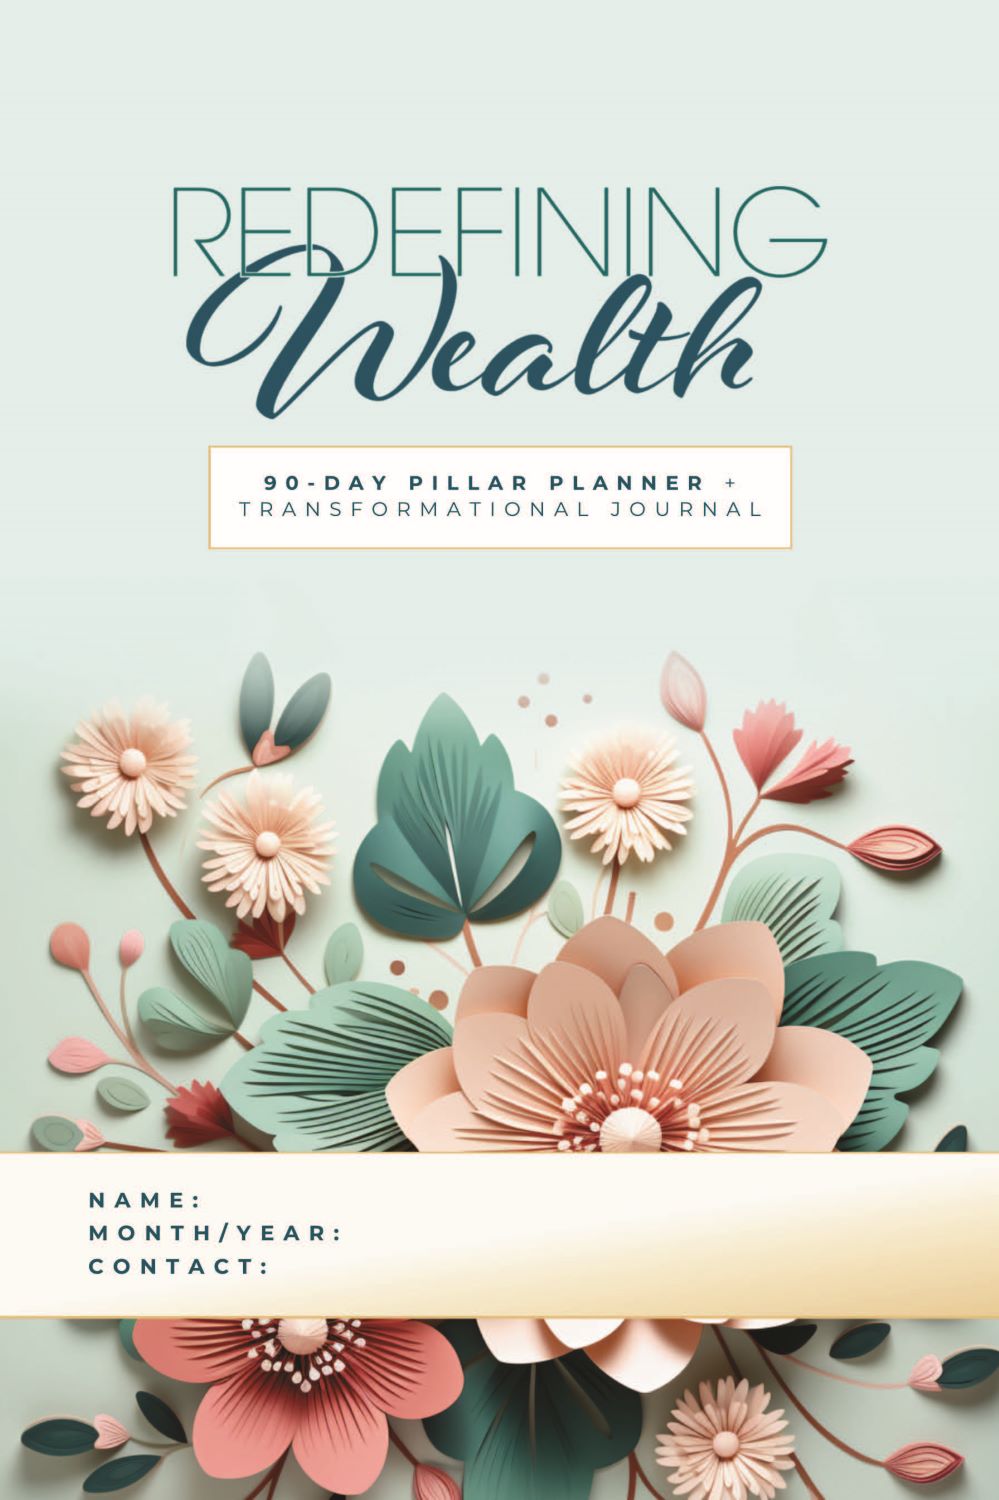 Redefining Wealth 90 Day Pillar Planner + Transformational Journal